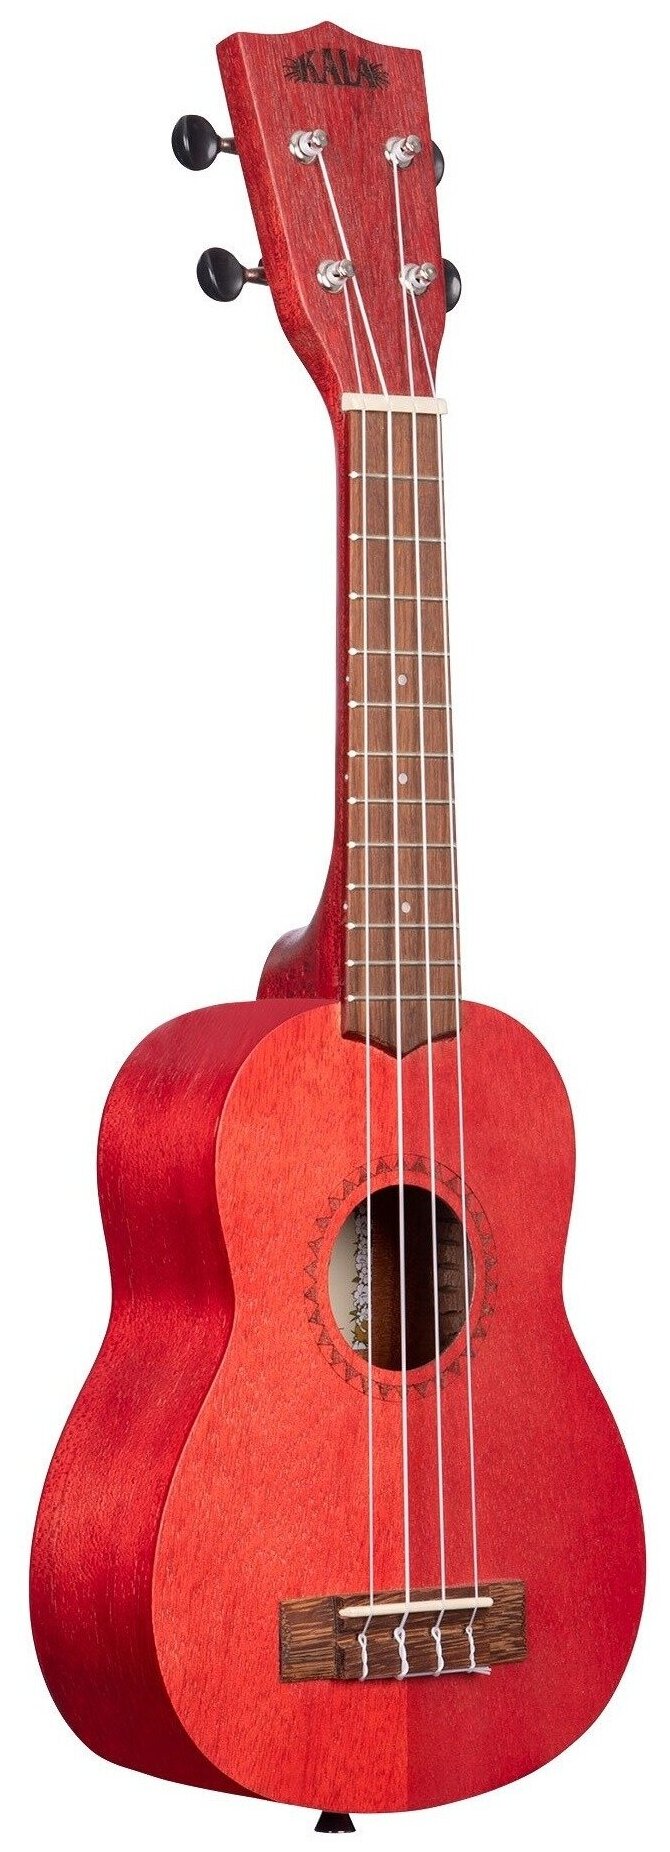 Kala KA-MRT-RED-S укулеле сопрано, цвет красный